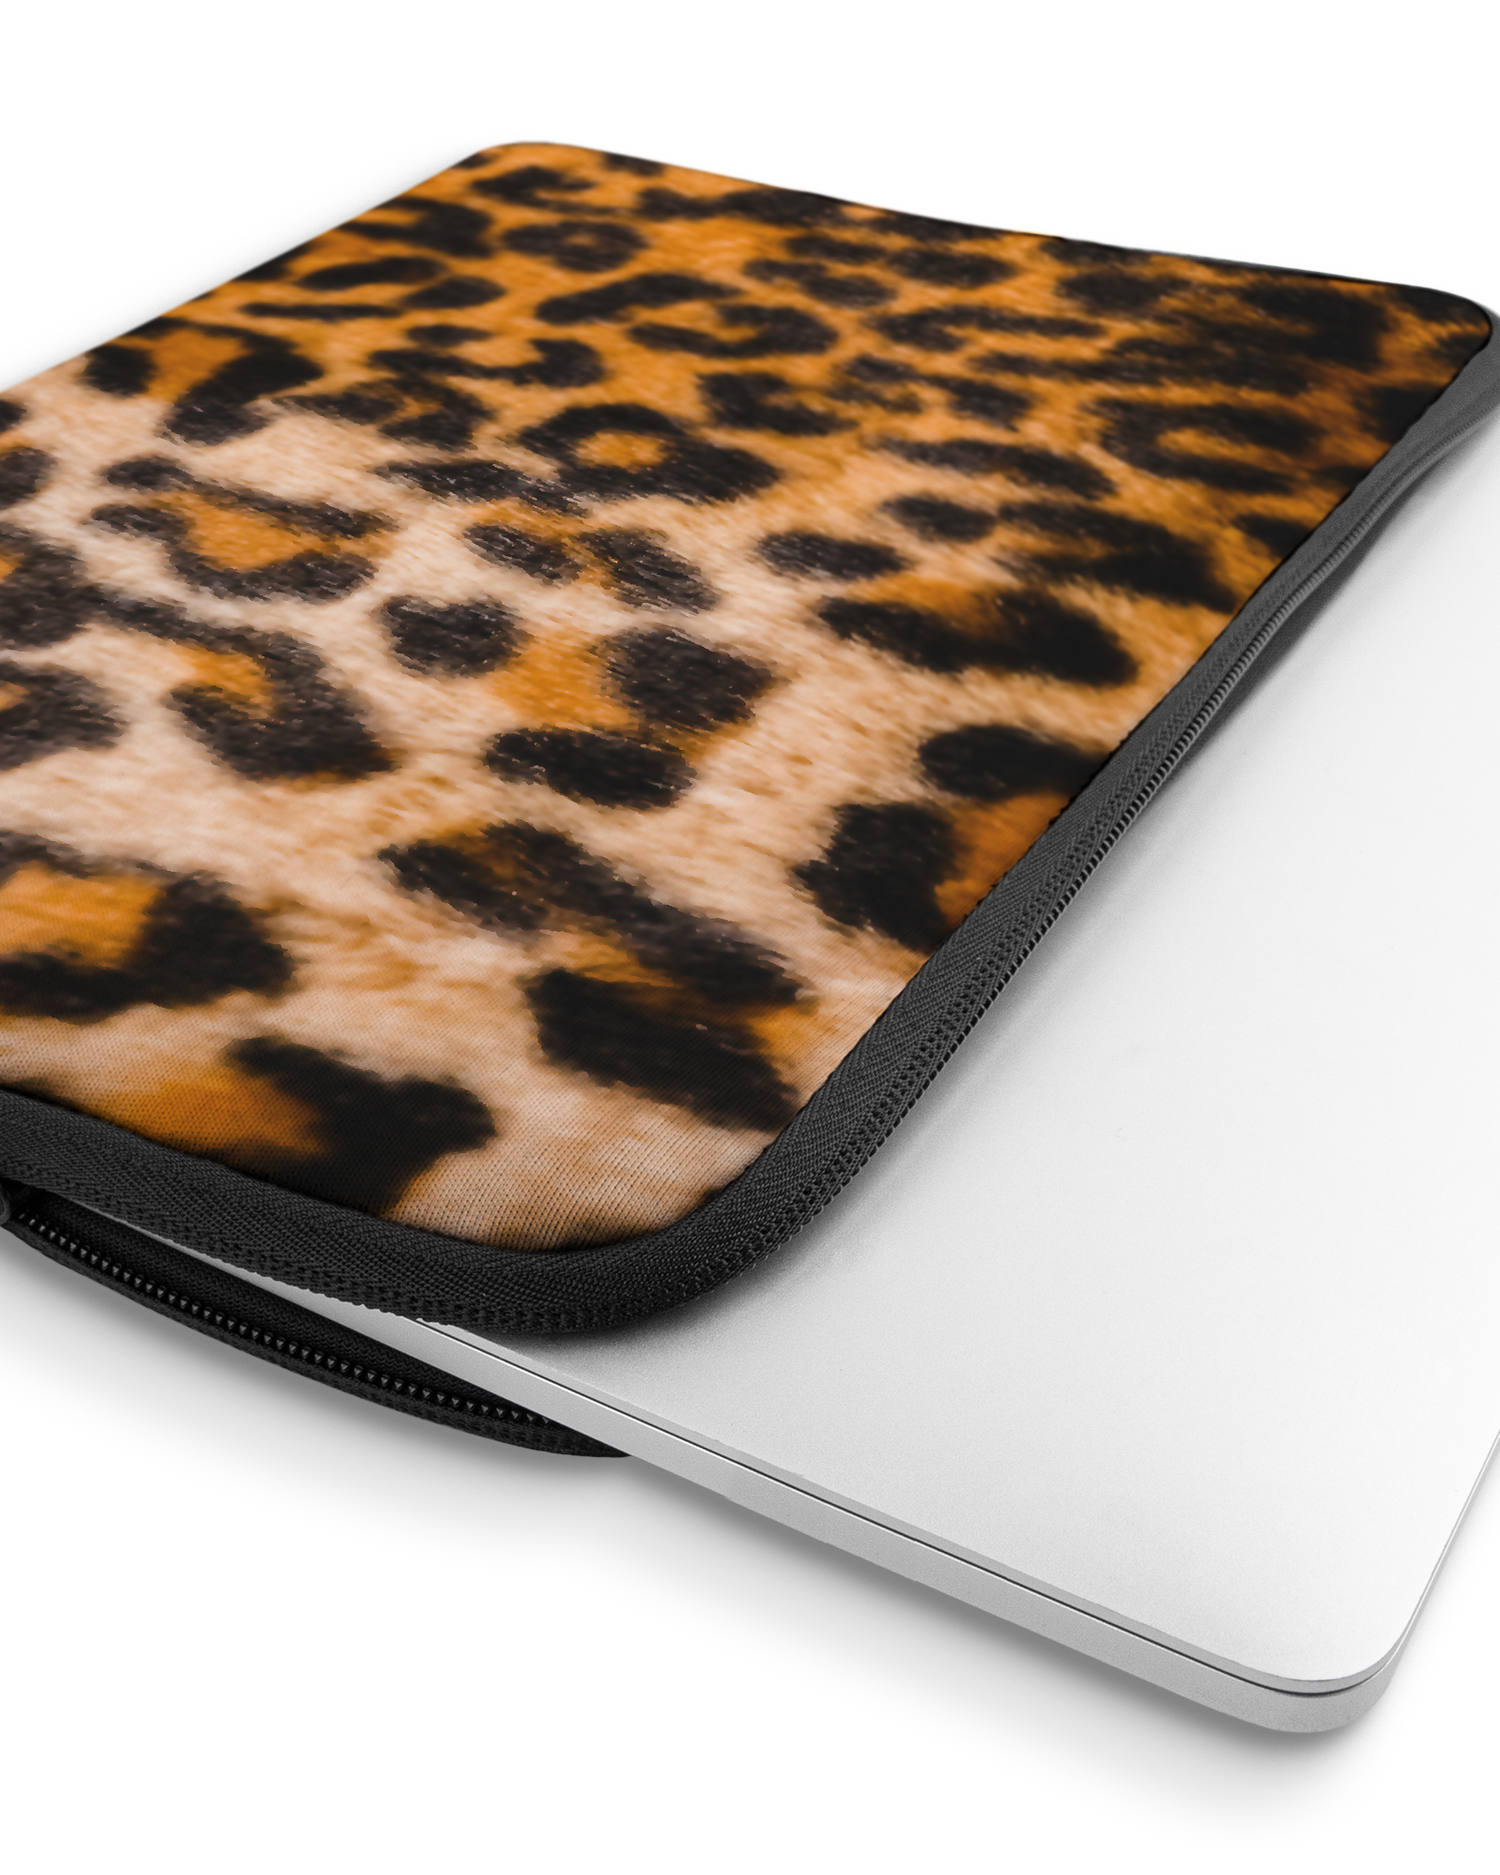 Leopard Pattern Laptop Case 16 inch with device inside